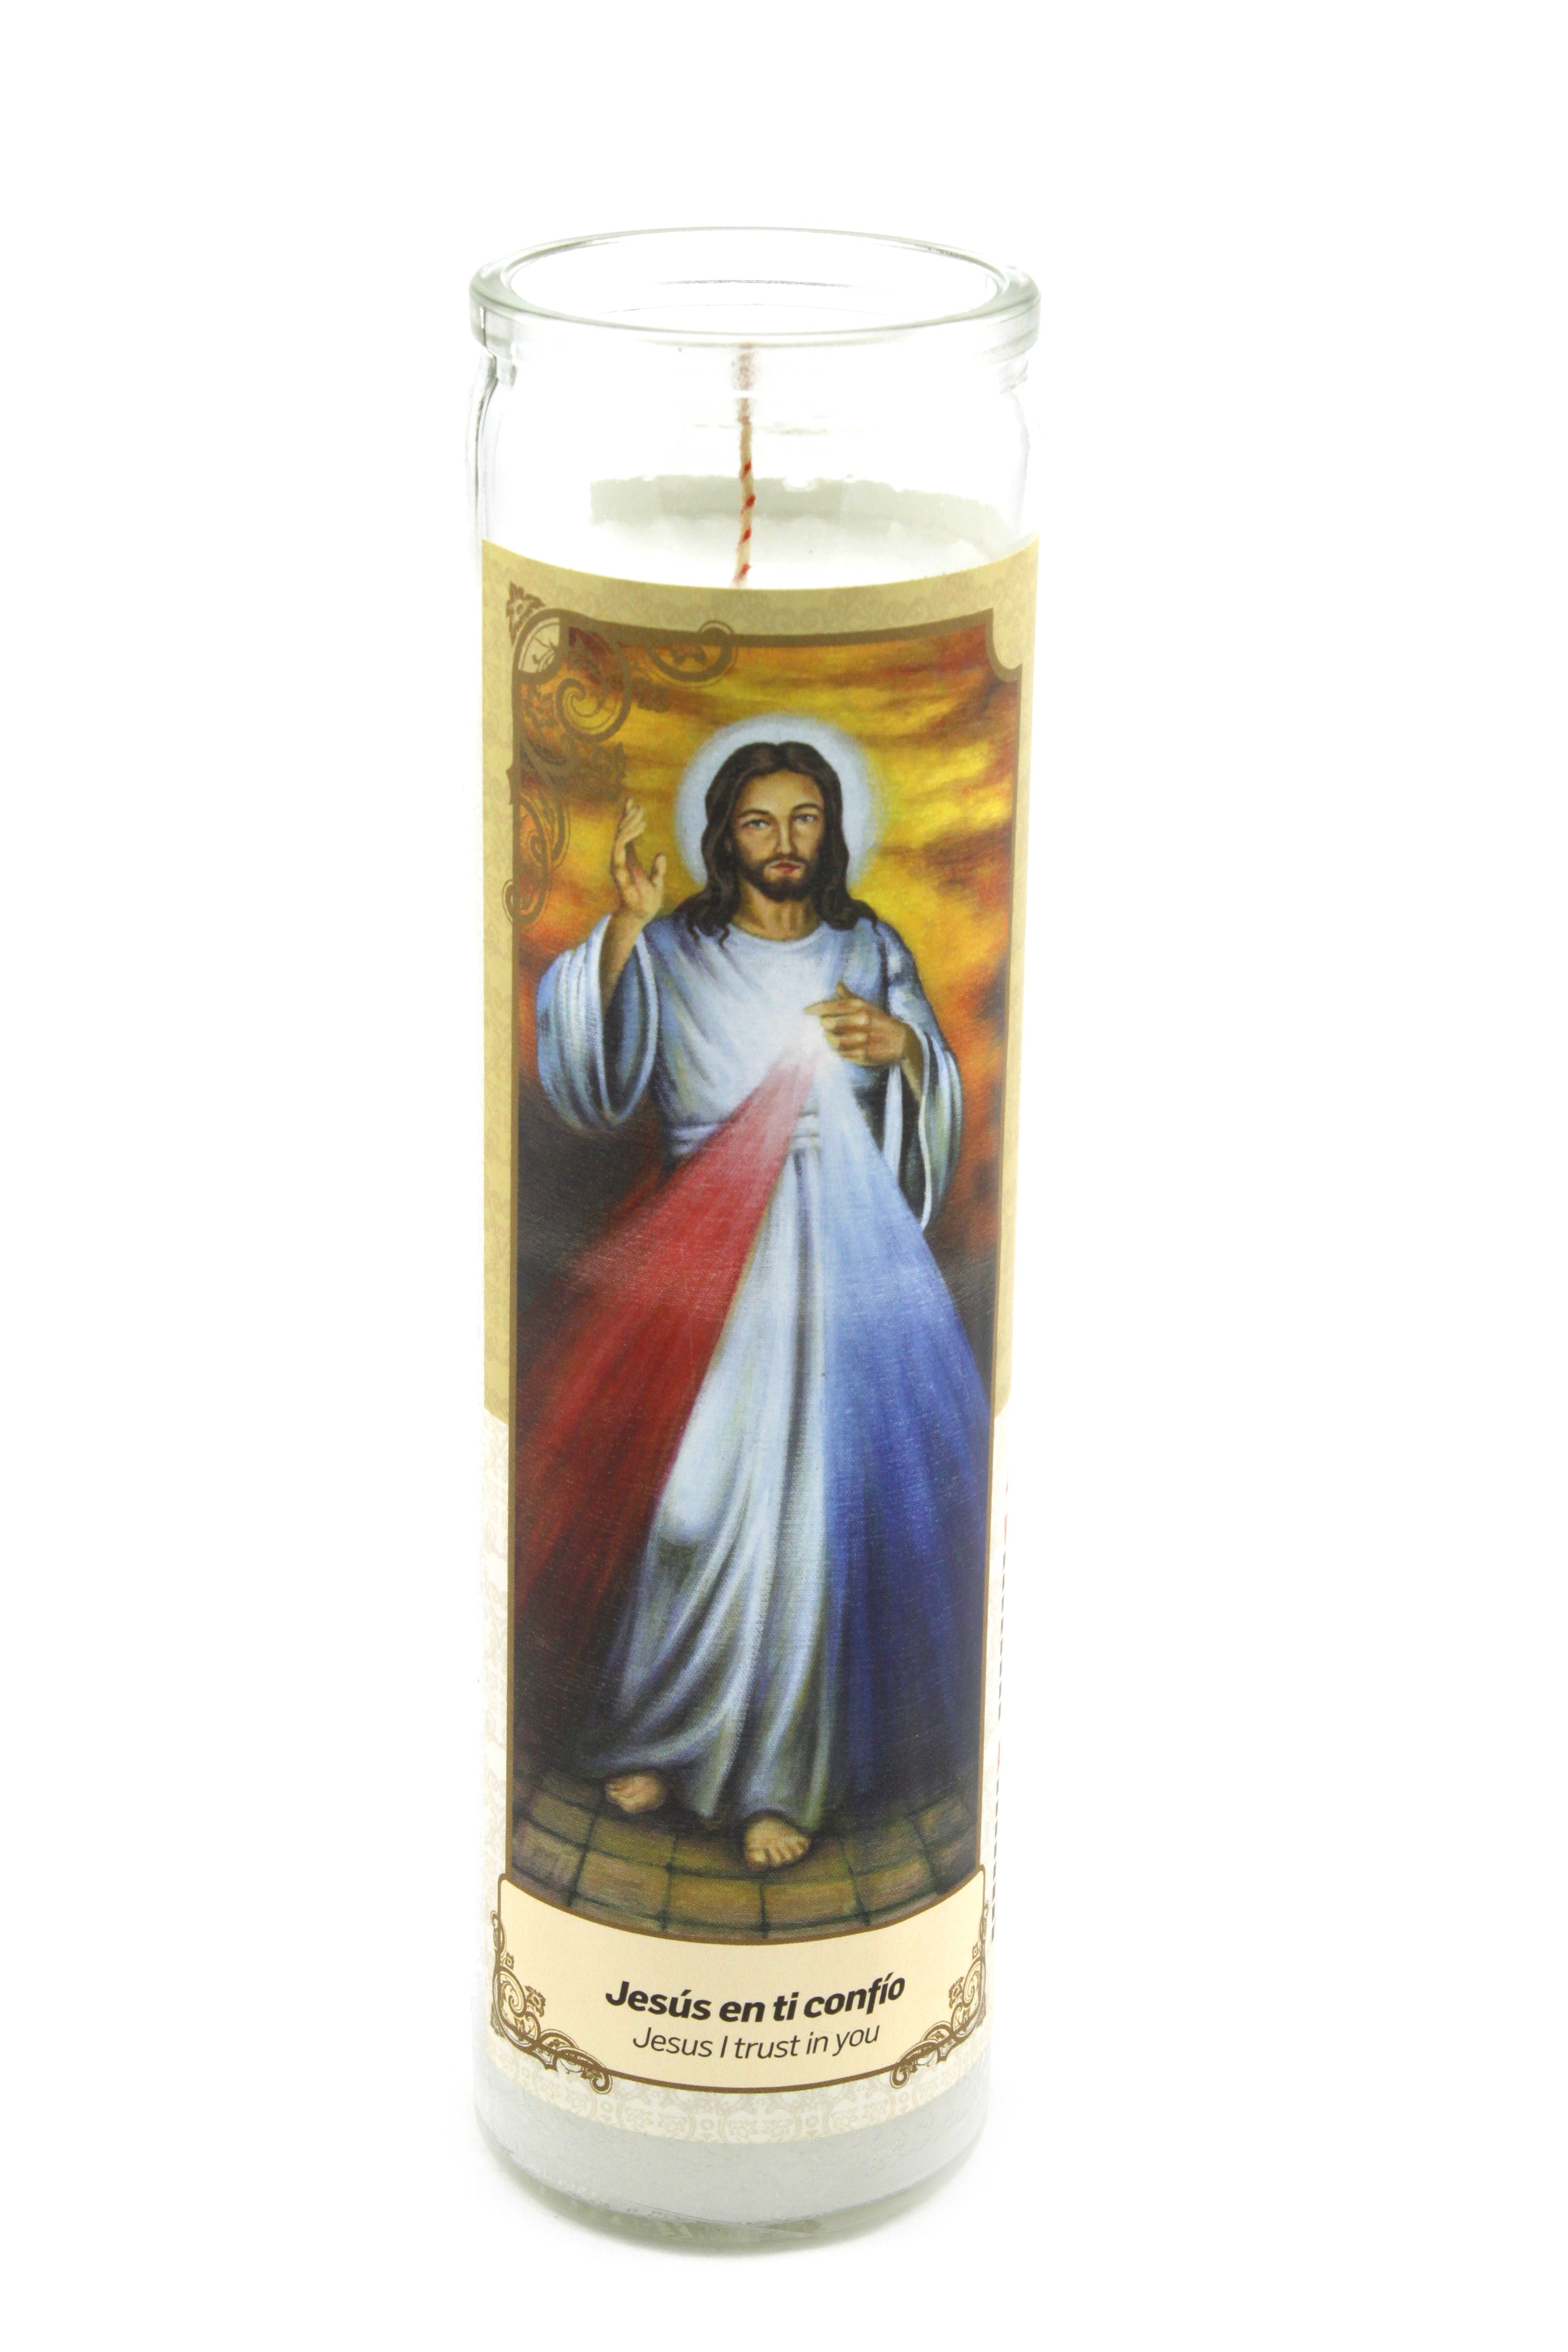 Candles Divine Mercy Jesus I Trust in You - Velones Divina Misericordia